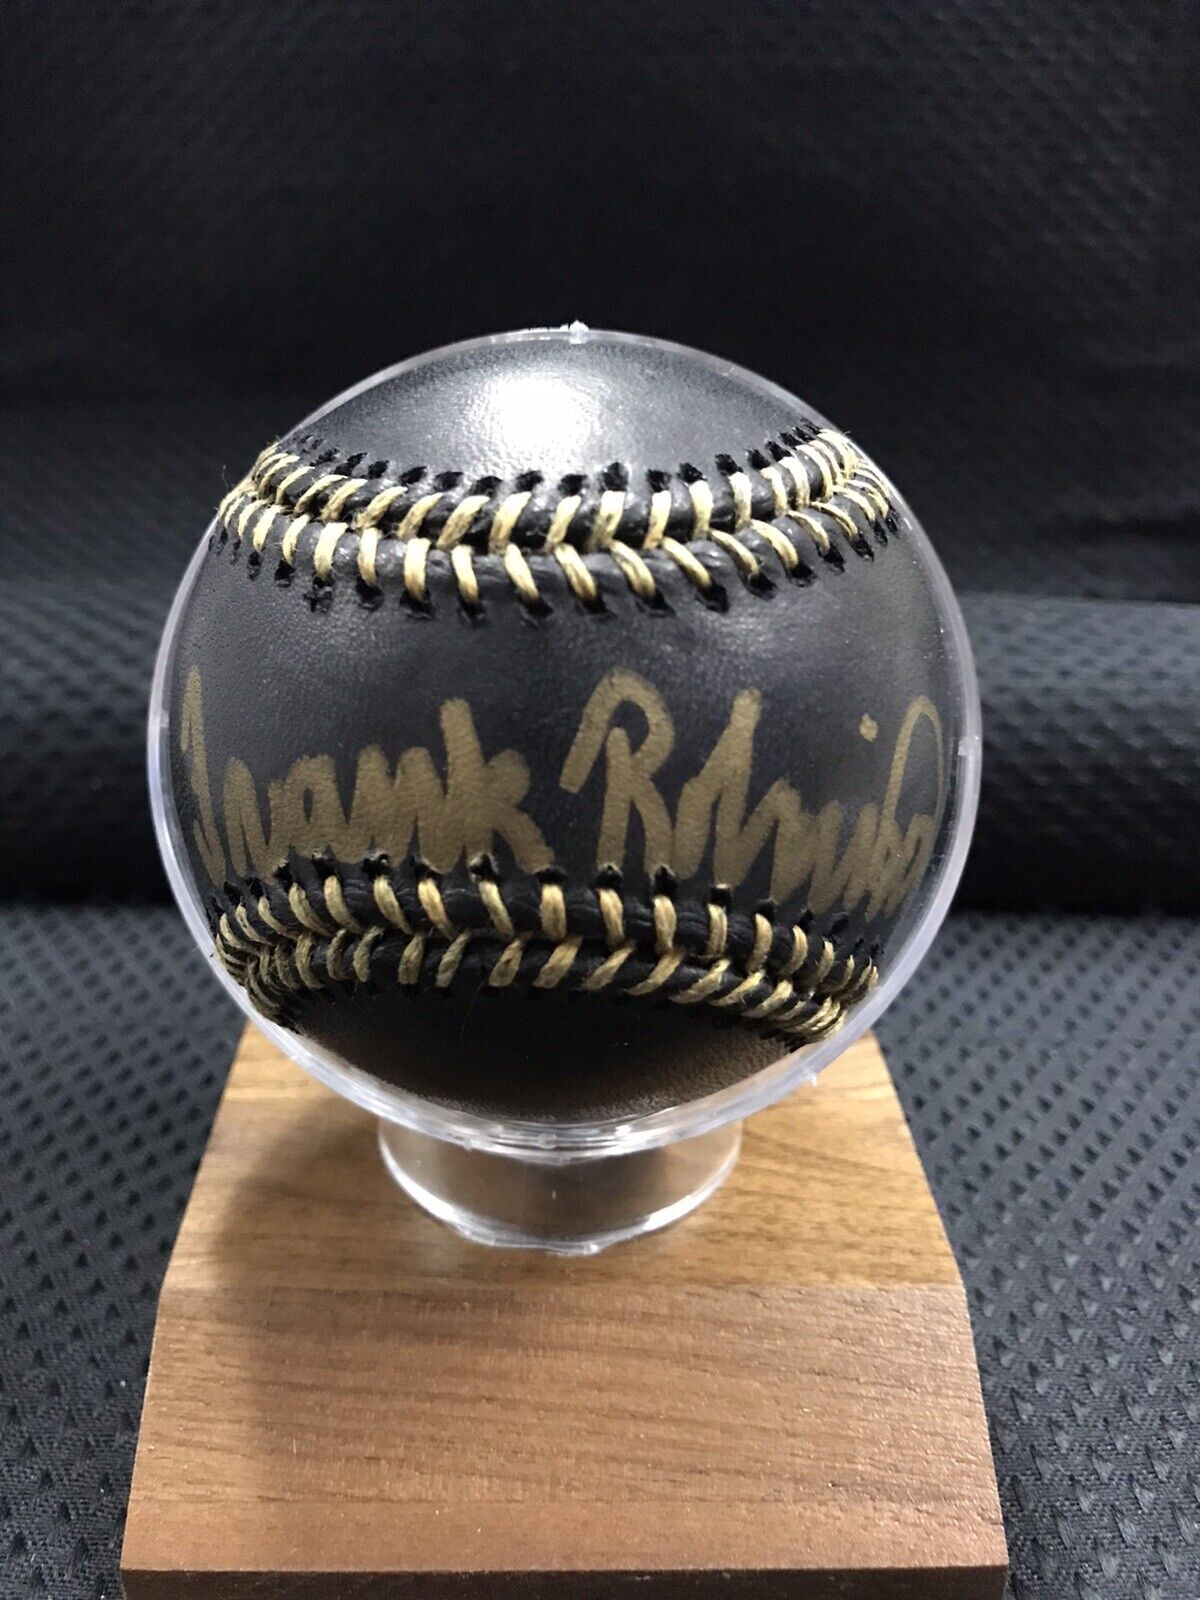 Frank Robinson Signed GOLD INK Autograph Baseball Inscribed HOF 82 JSA COA